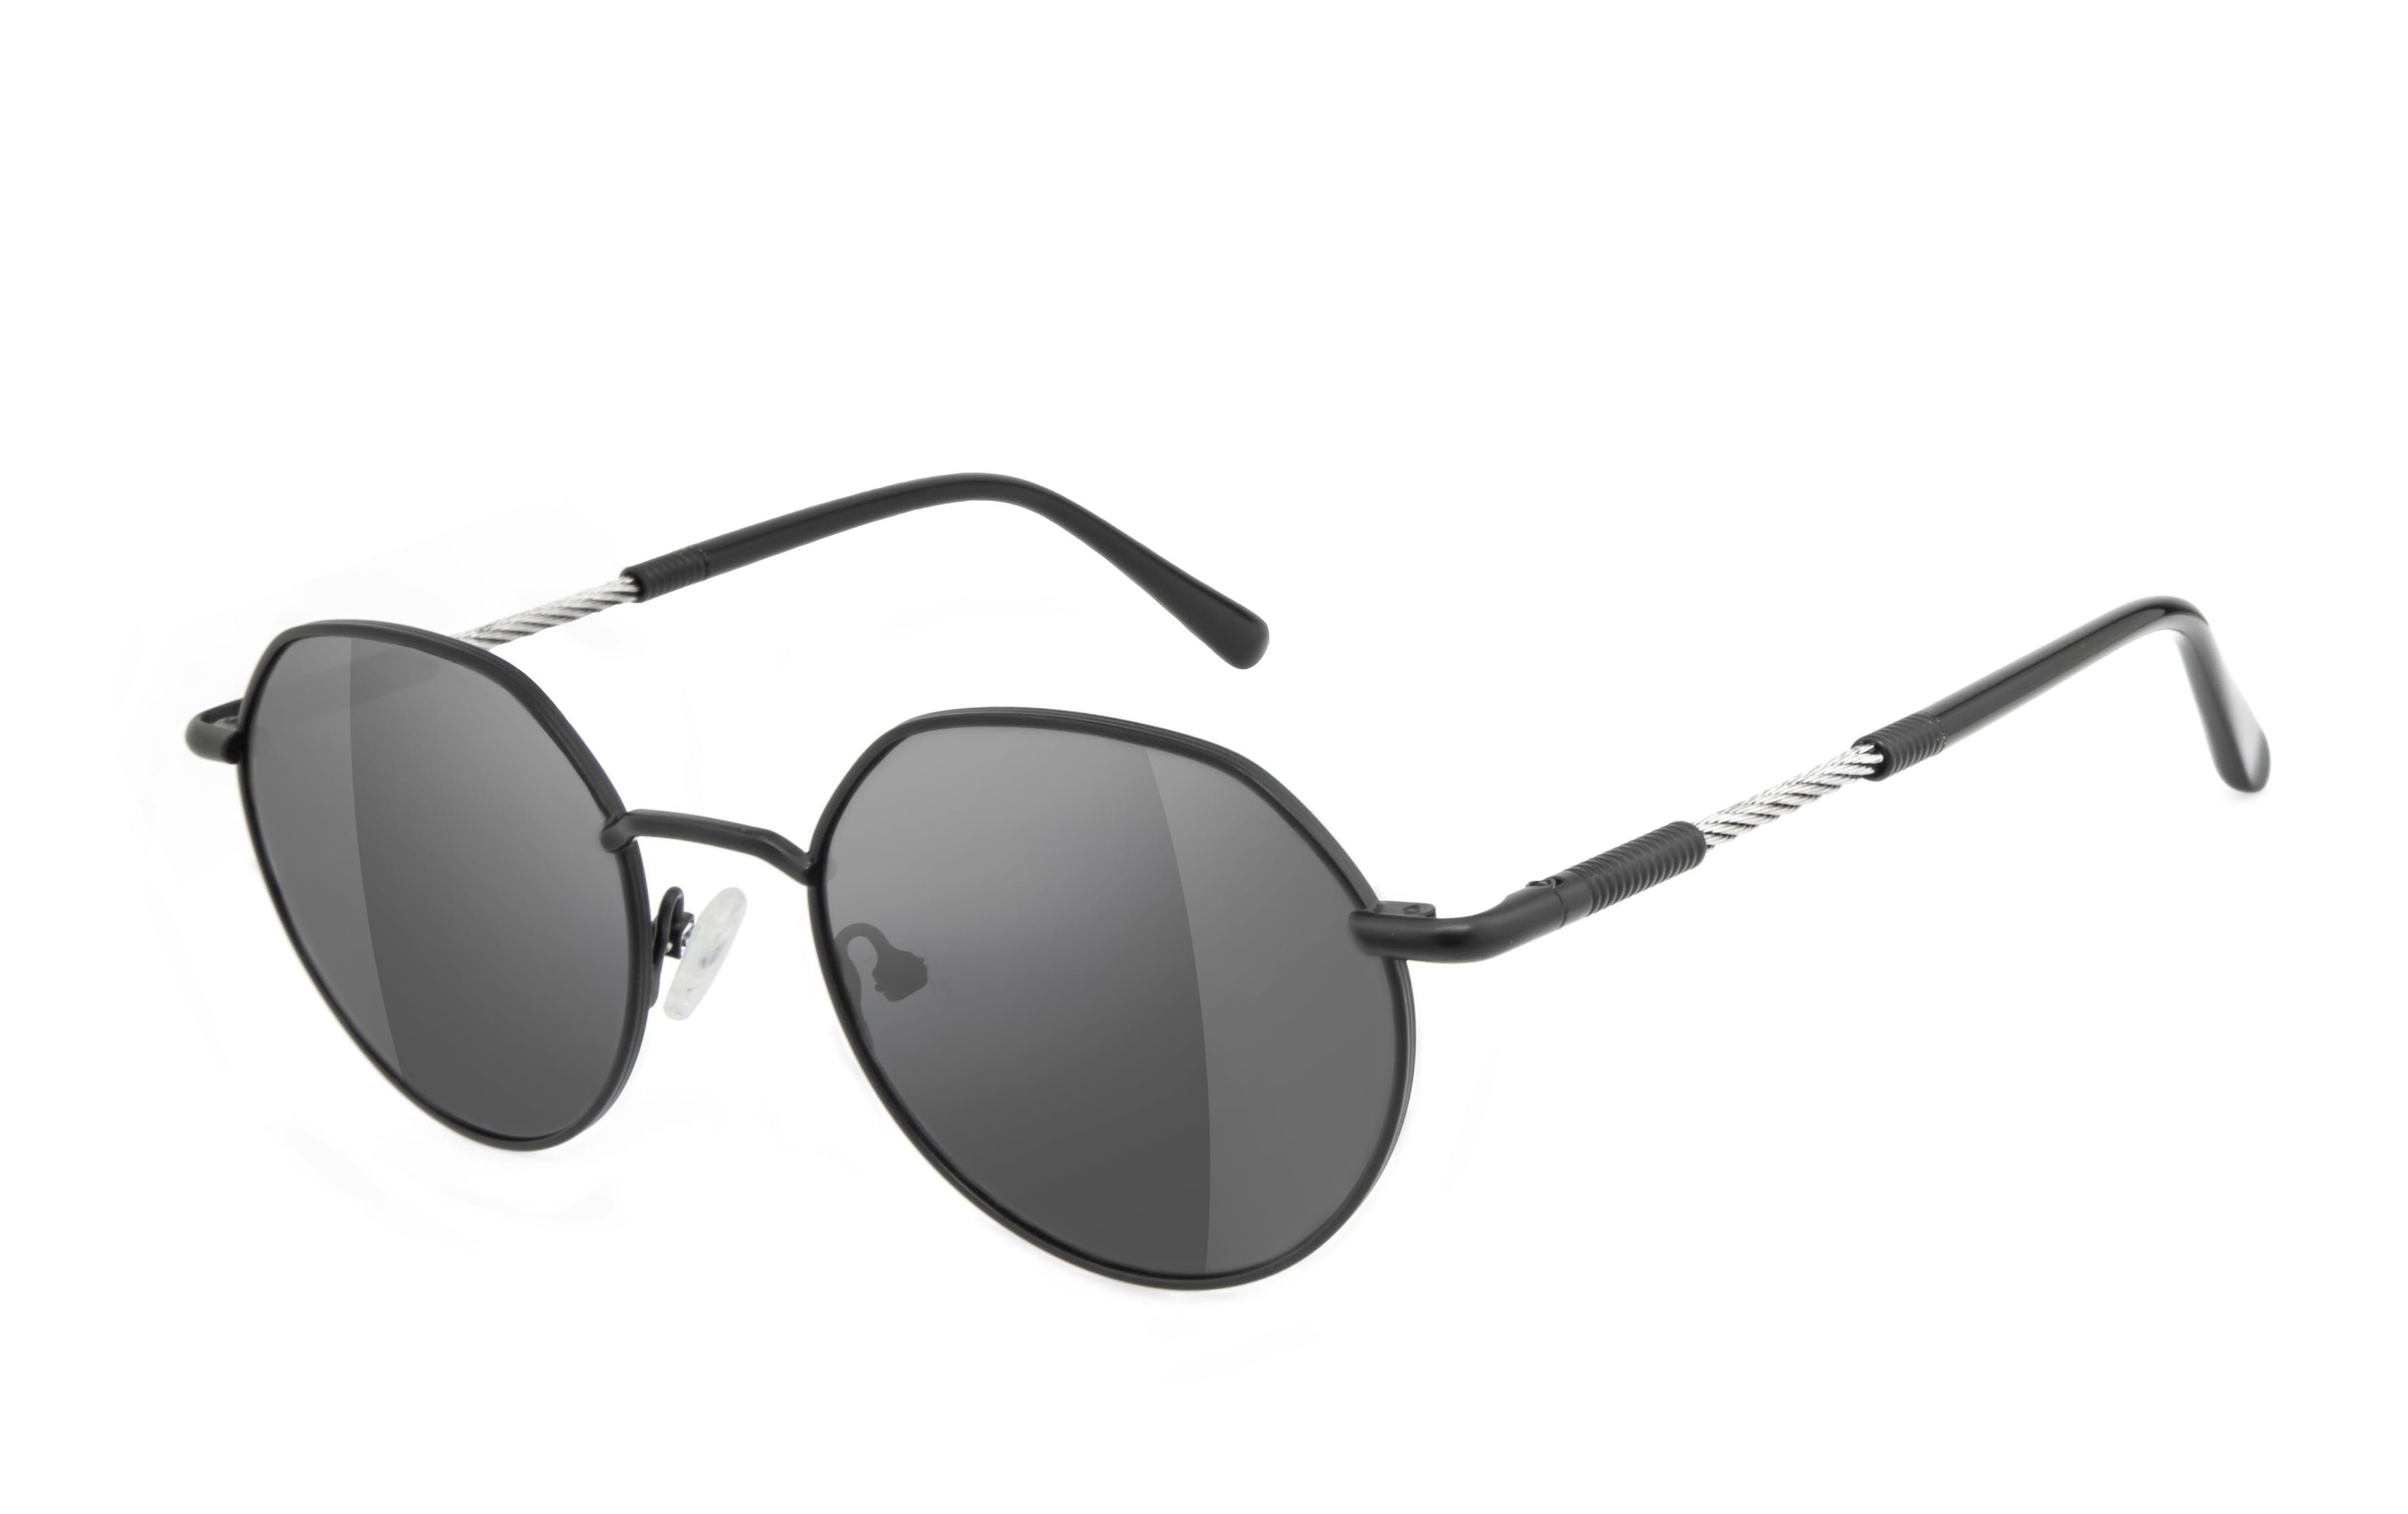 BERTONI HLT® Flex-Scharniere EYEWEAR Sonnenbrille Qualitätsgläser, BTE003b-a